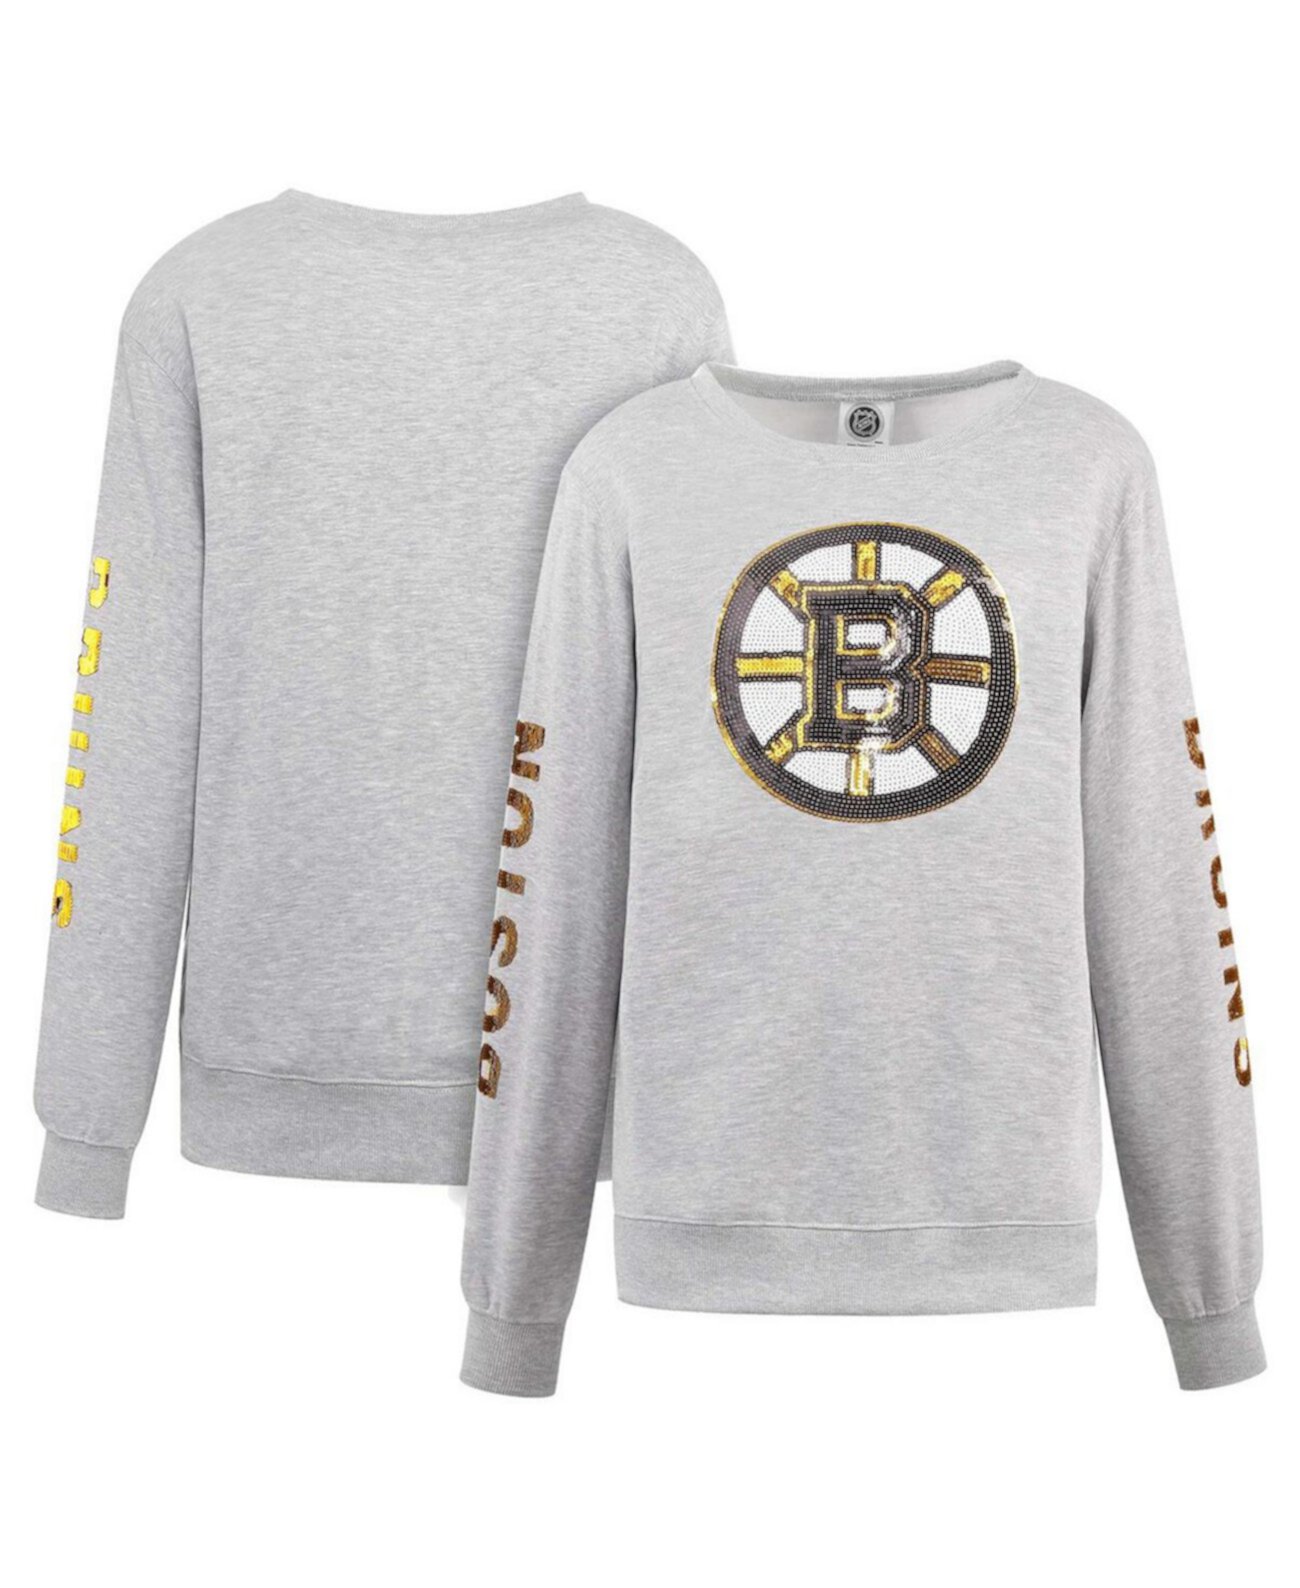 Женский пуловер с пайетками Heather Grey Boston Bruins Cuce